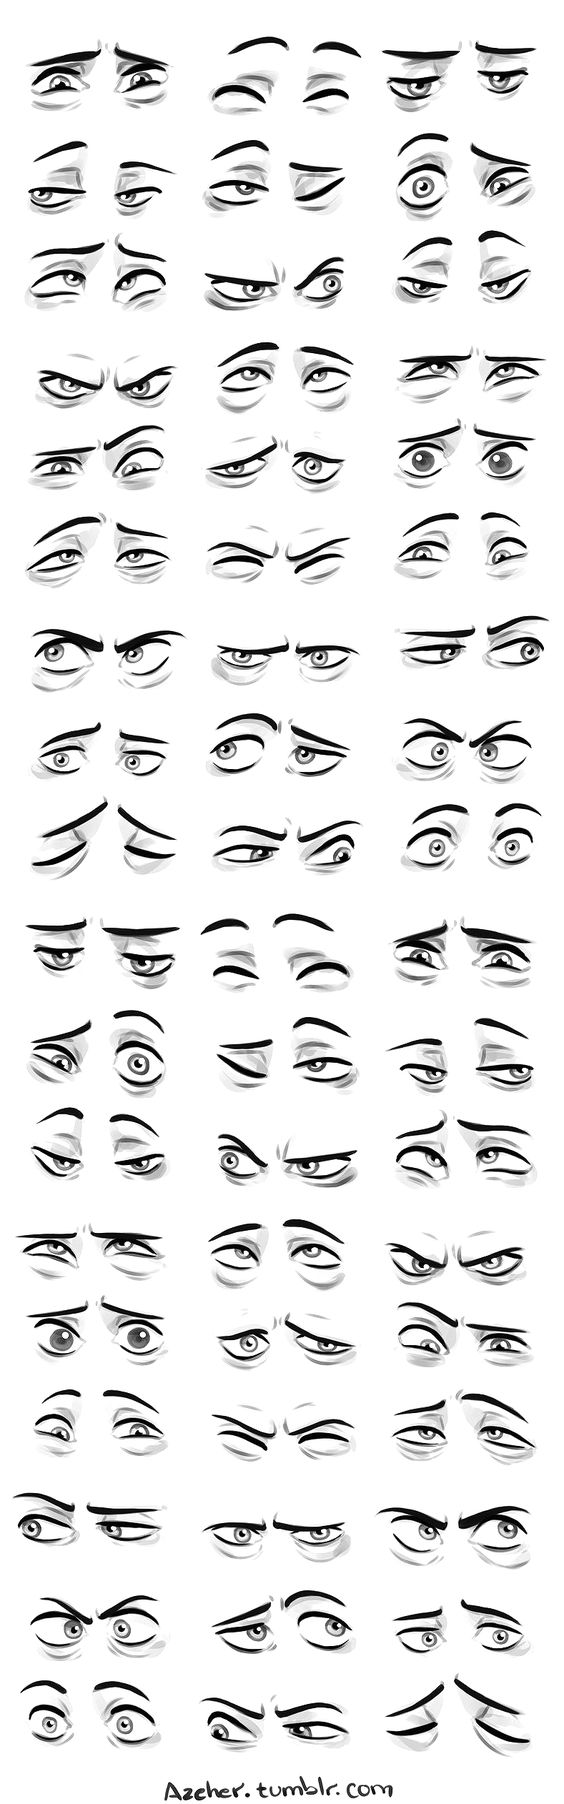 Character Anatomy | Eyes